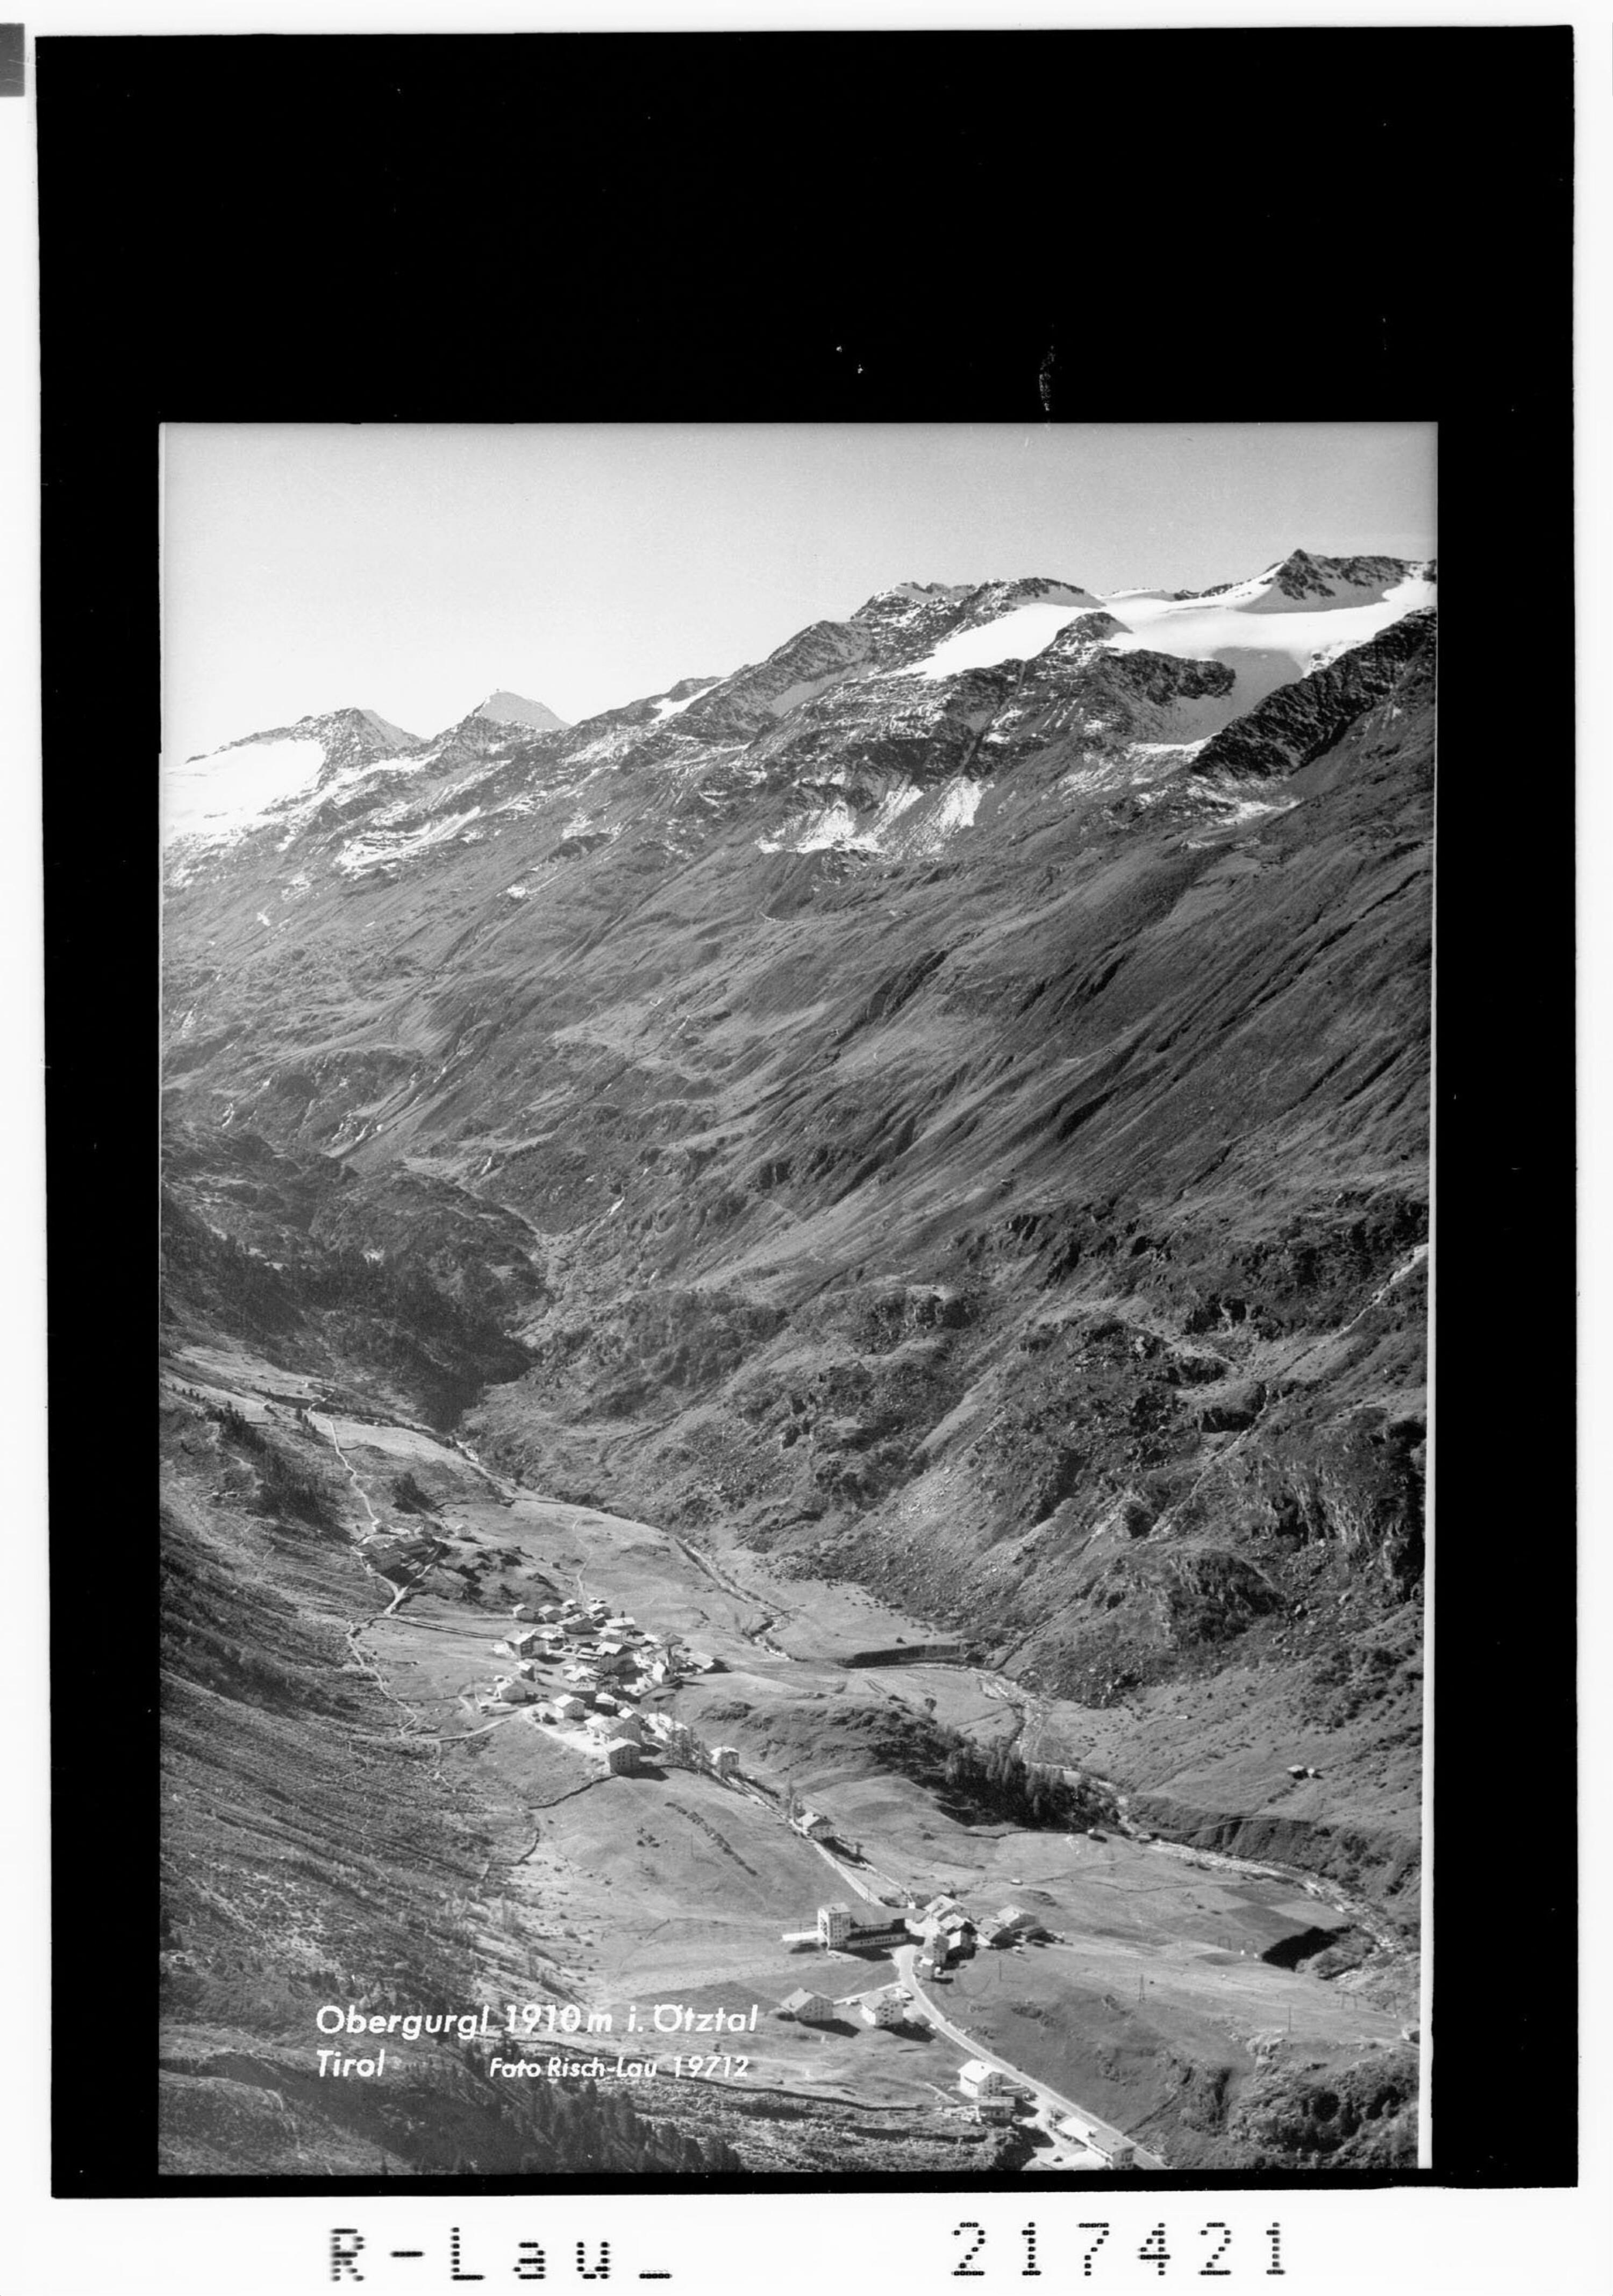 Obergurgl 1910 m im Ötztal Tirol></div>


    <hr>
    <div class=